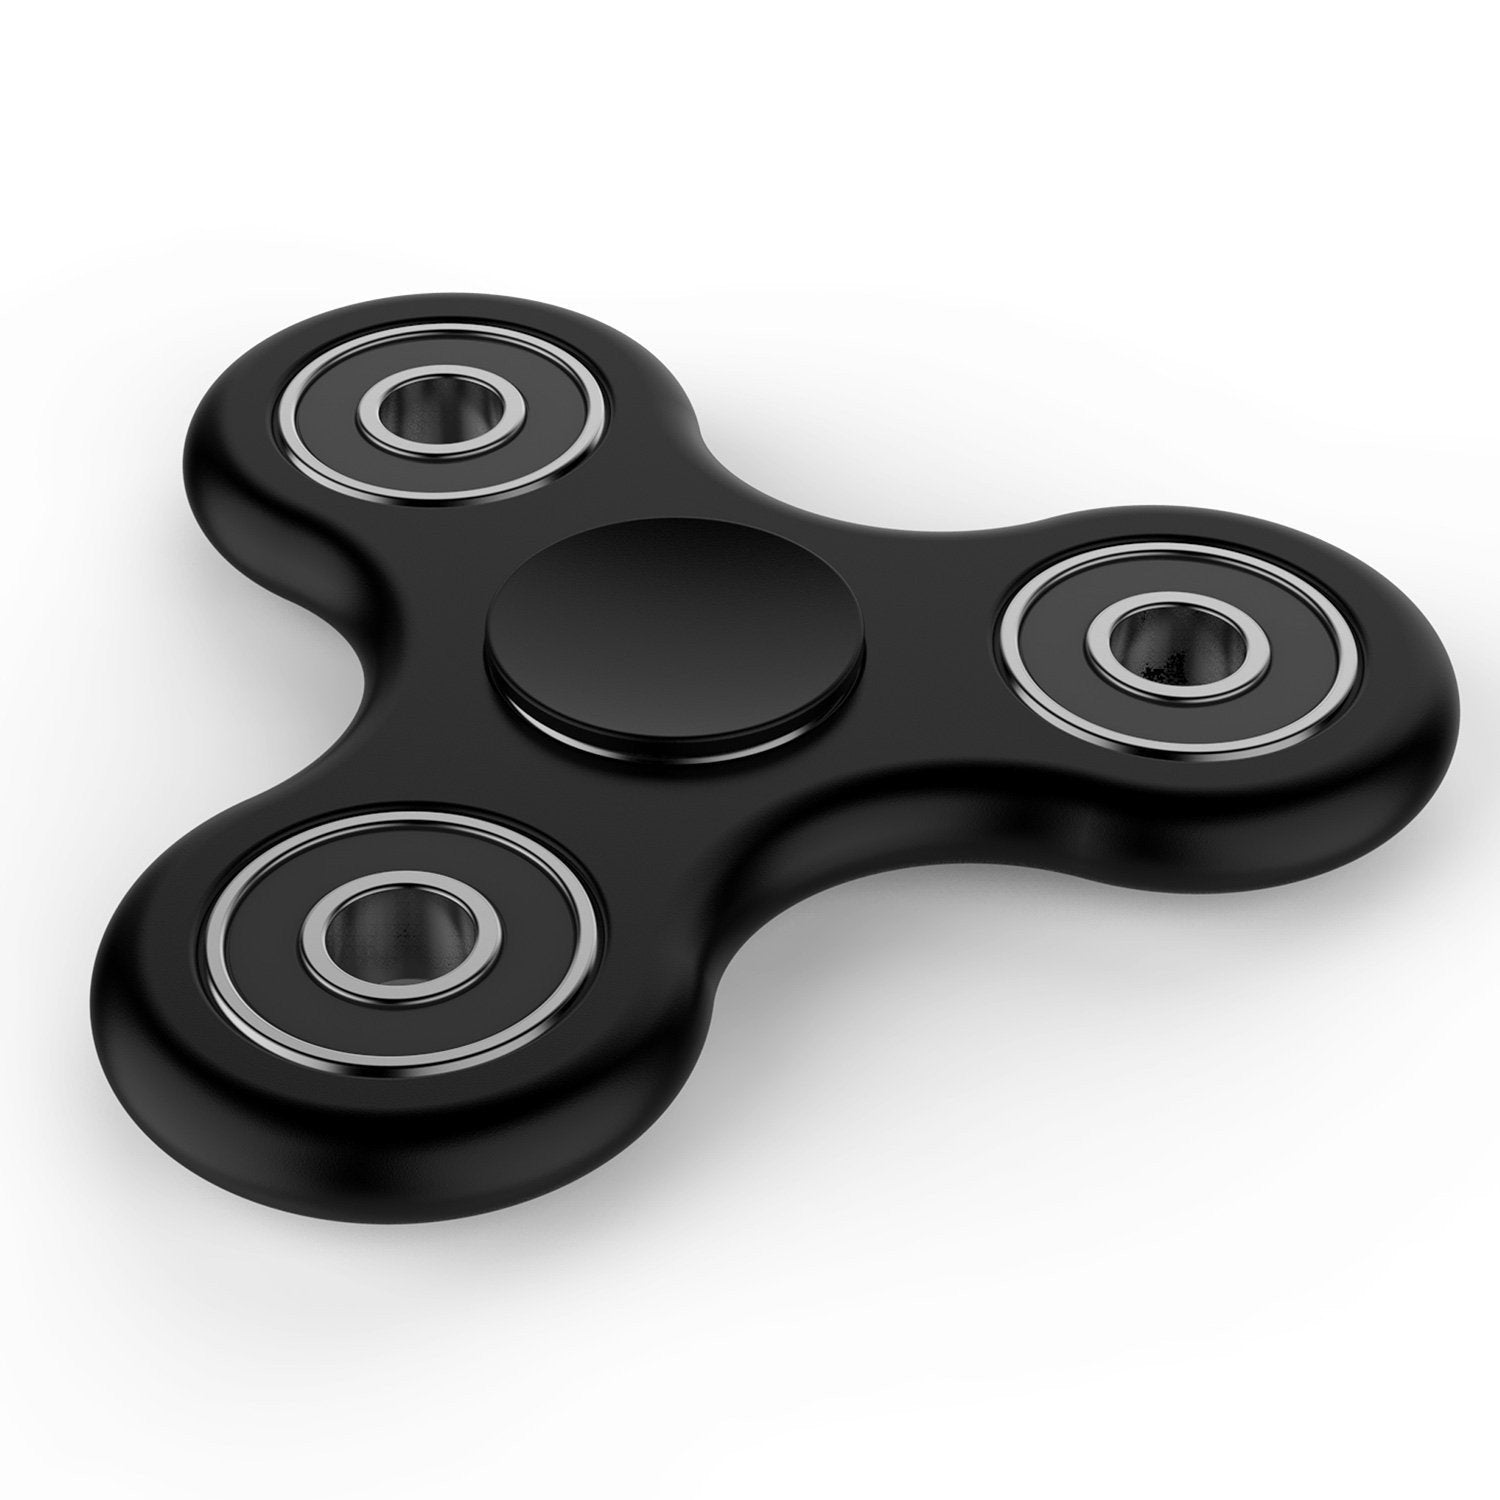 InfiSpin Z1 Fidget Spinner, Prime EDC Focus + Stress Relief Toy [Black]